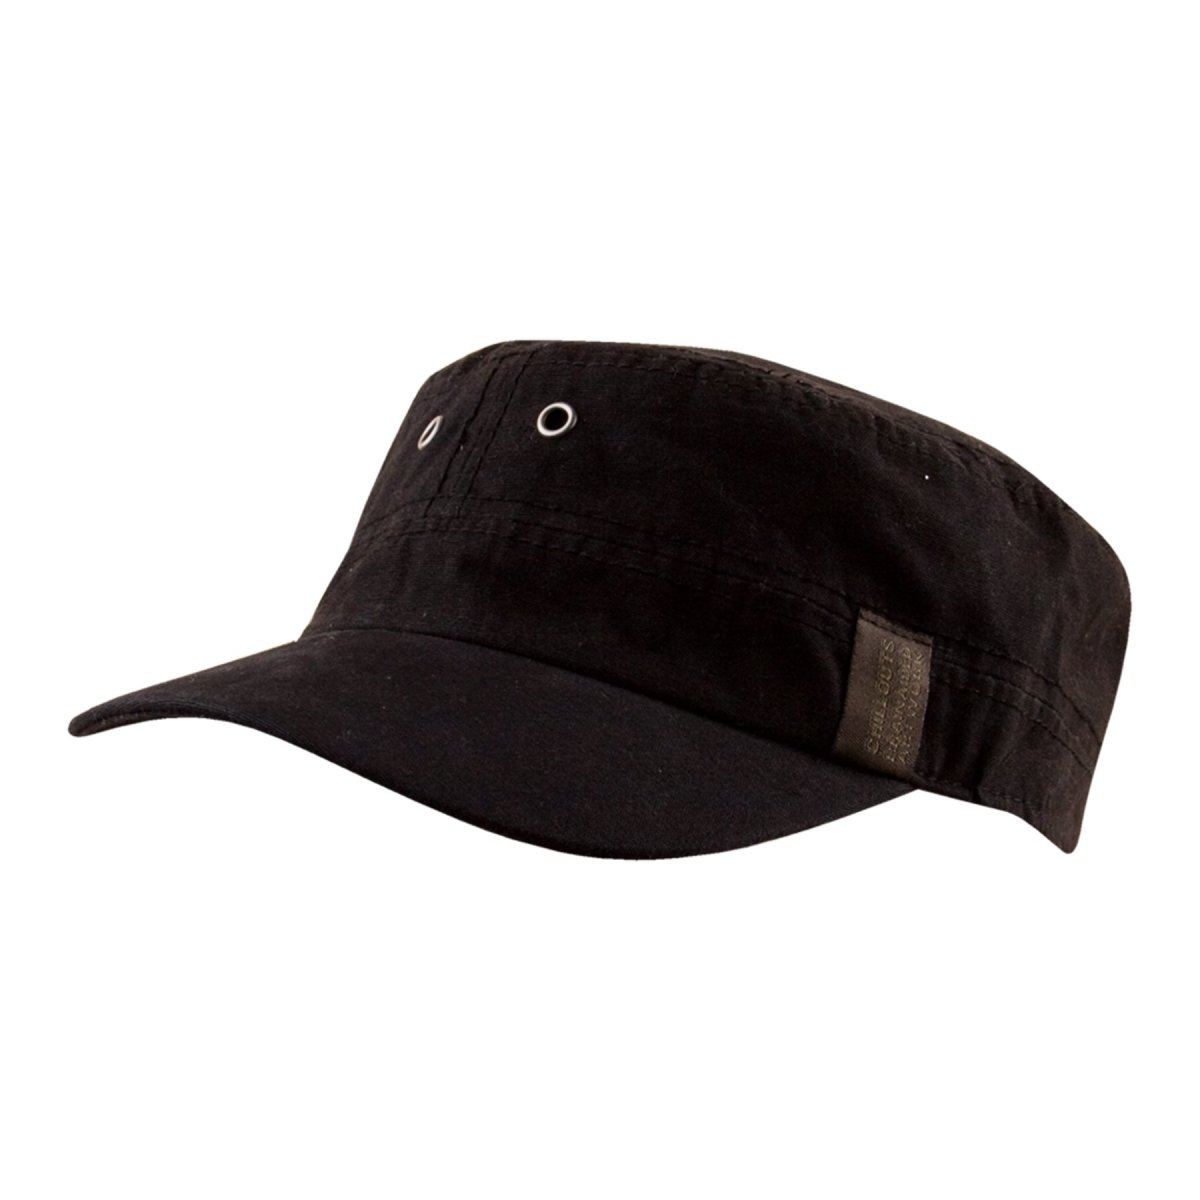 Military Cap aus 100% - – Baumwolle jetzt Chillouts Funktionale Caps Headwear kaufen